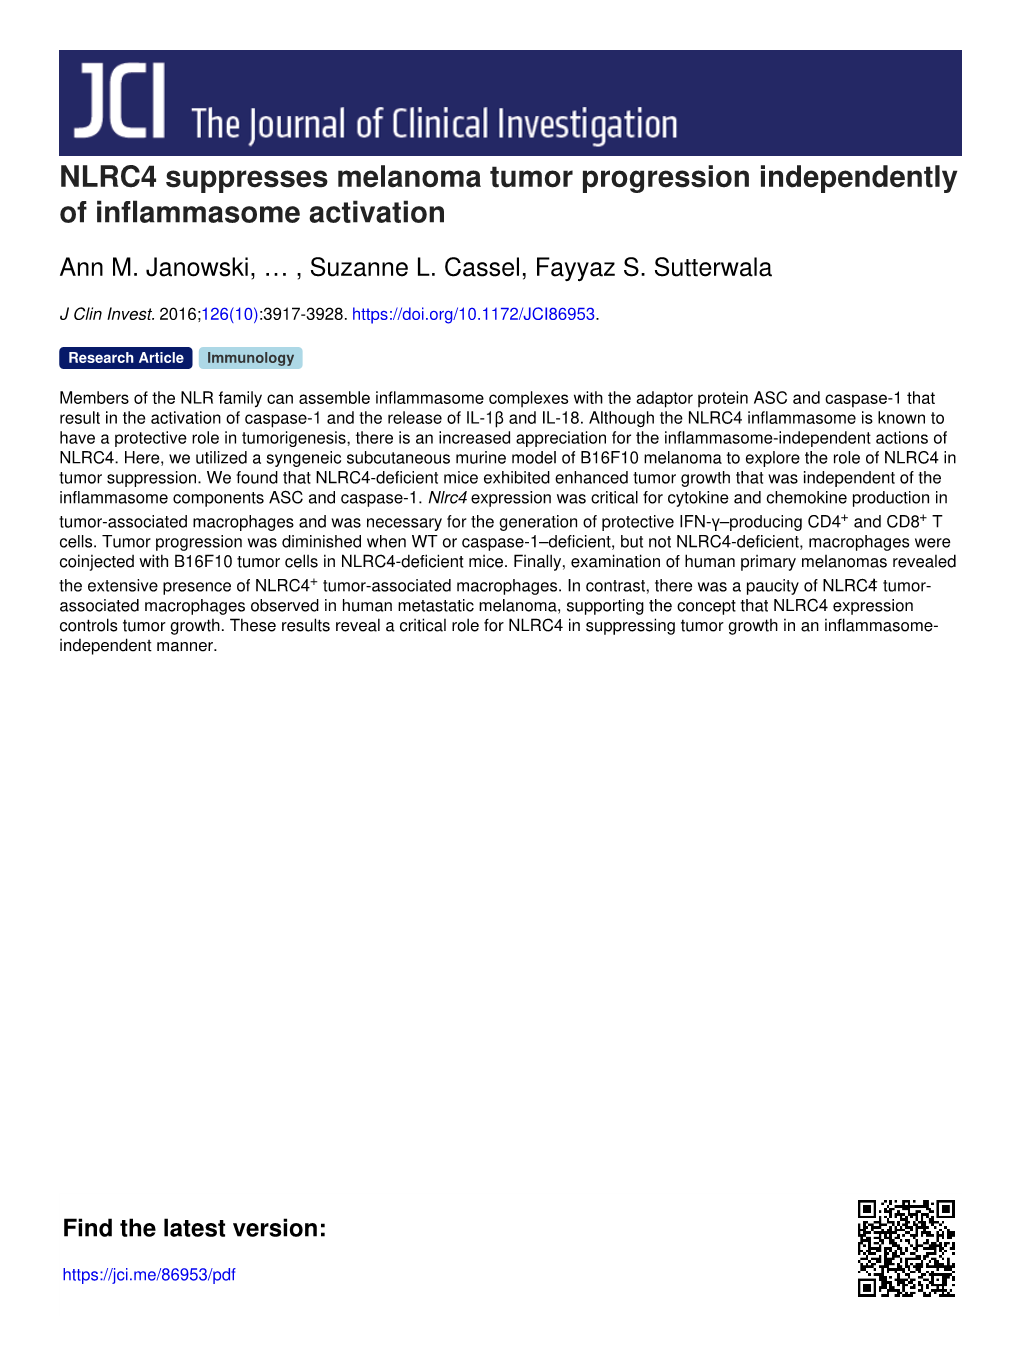 NLRC4 Suppresses Melanoma Tumor Progression Independently of Inflammasome Activation